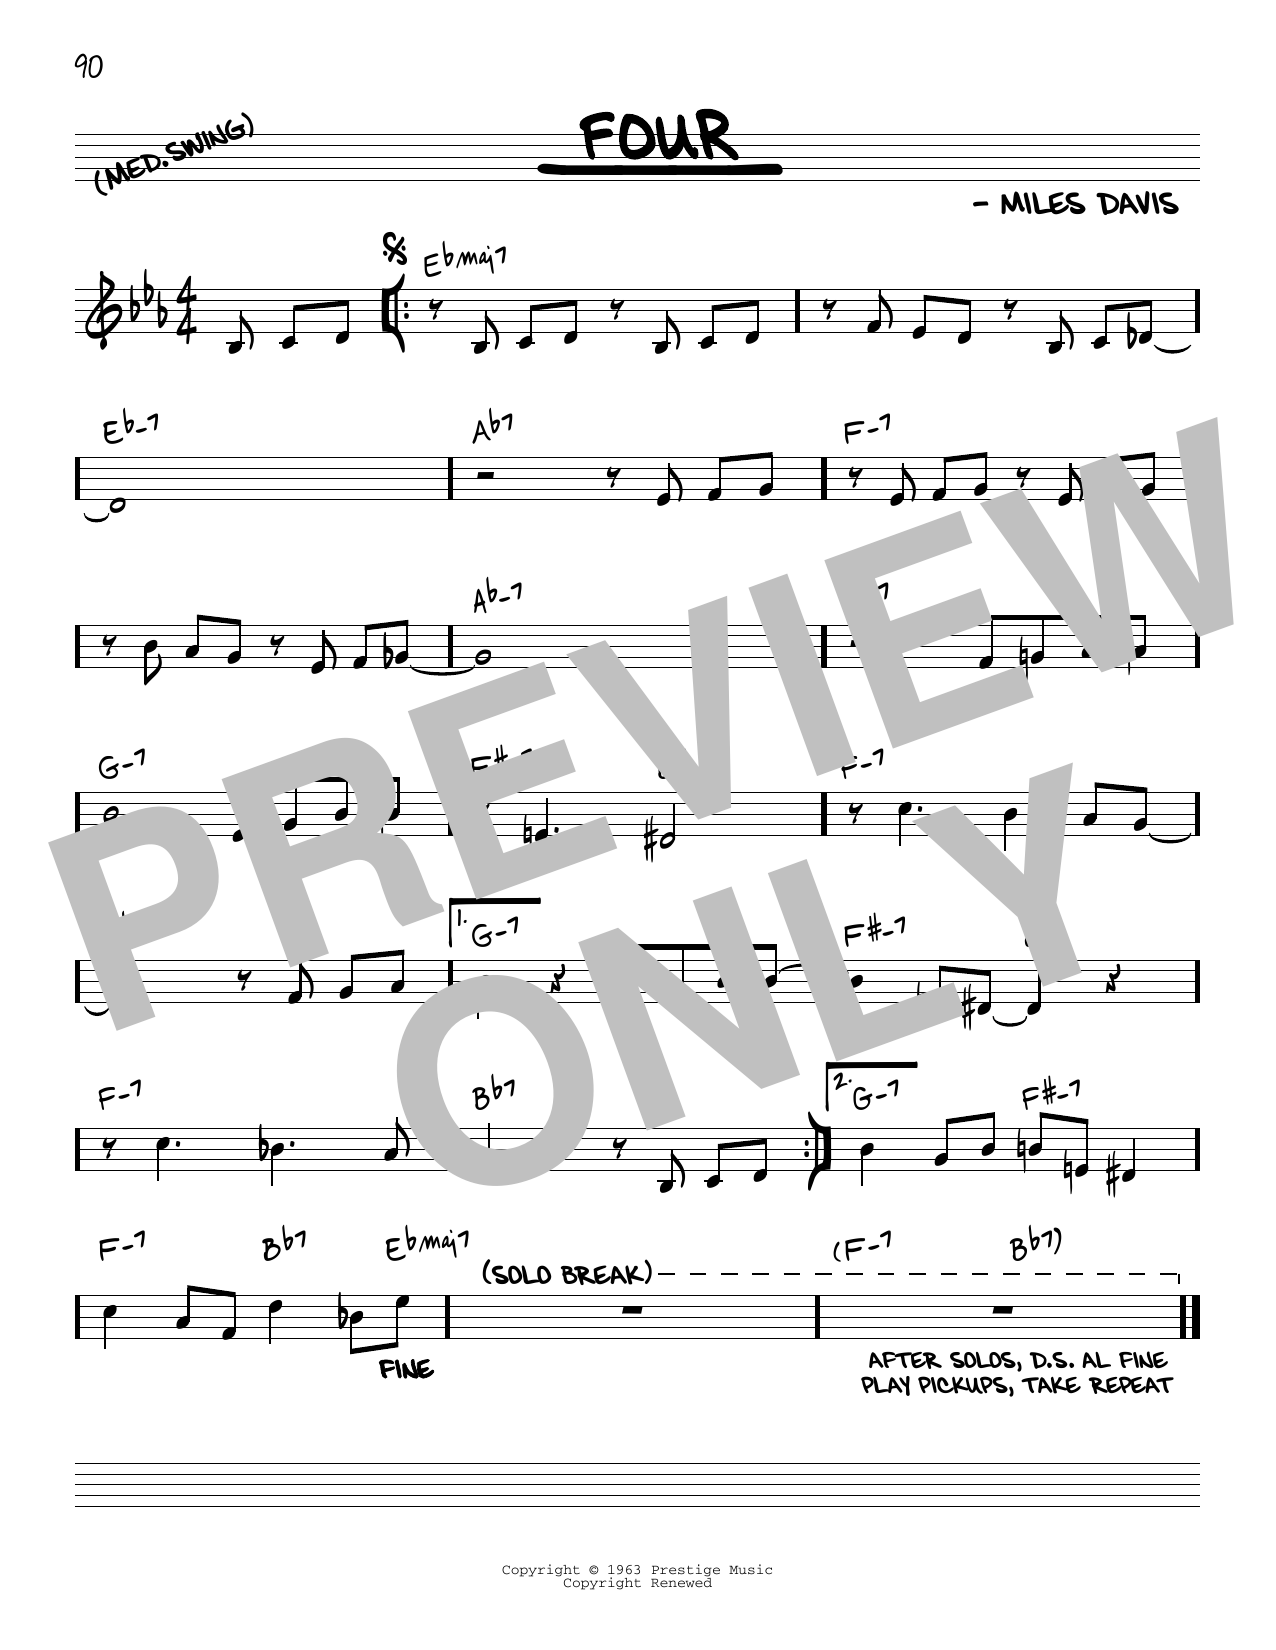 Miles Davis Four Sheet Music Notes & Chords for Trumpet Transcription - Download or Print PDF